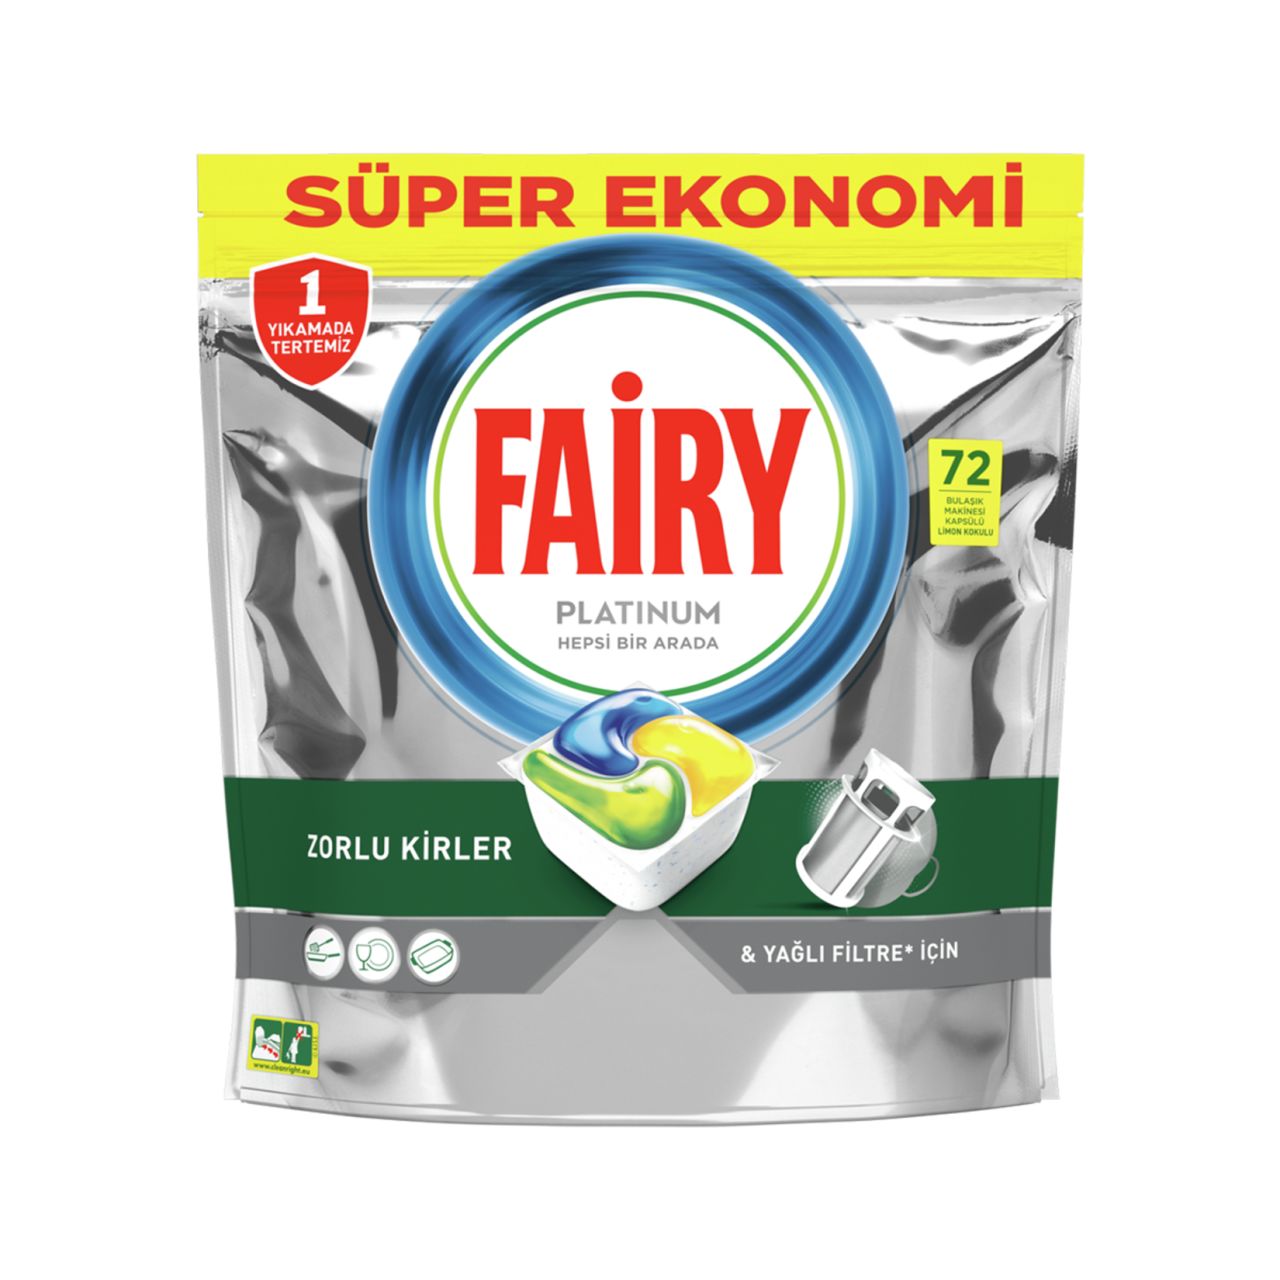 Fairy Platinum Limon Kokulu 72 Yıkama